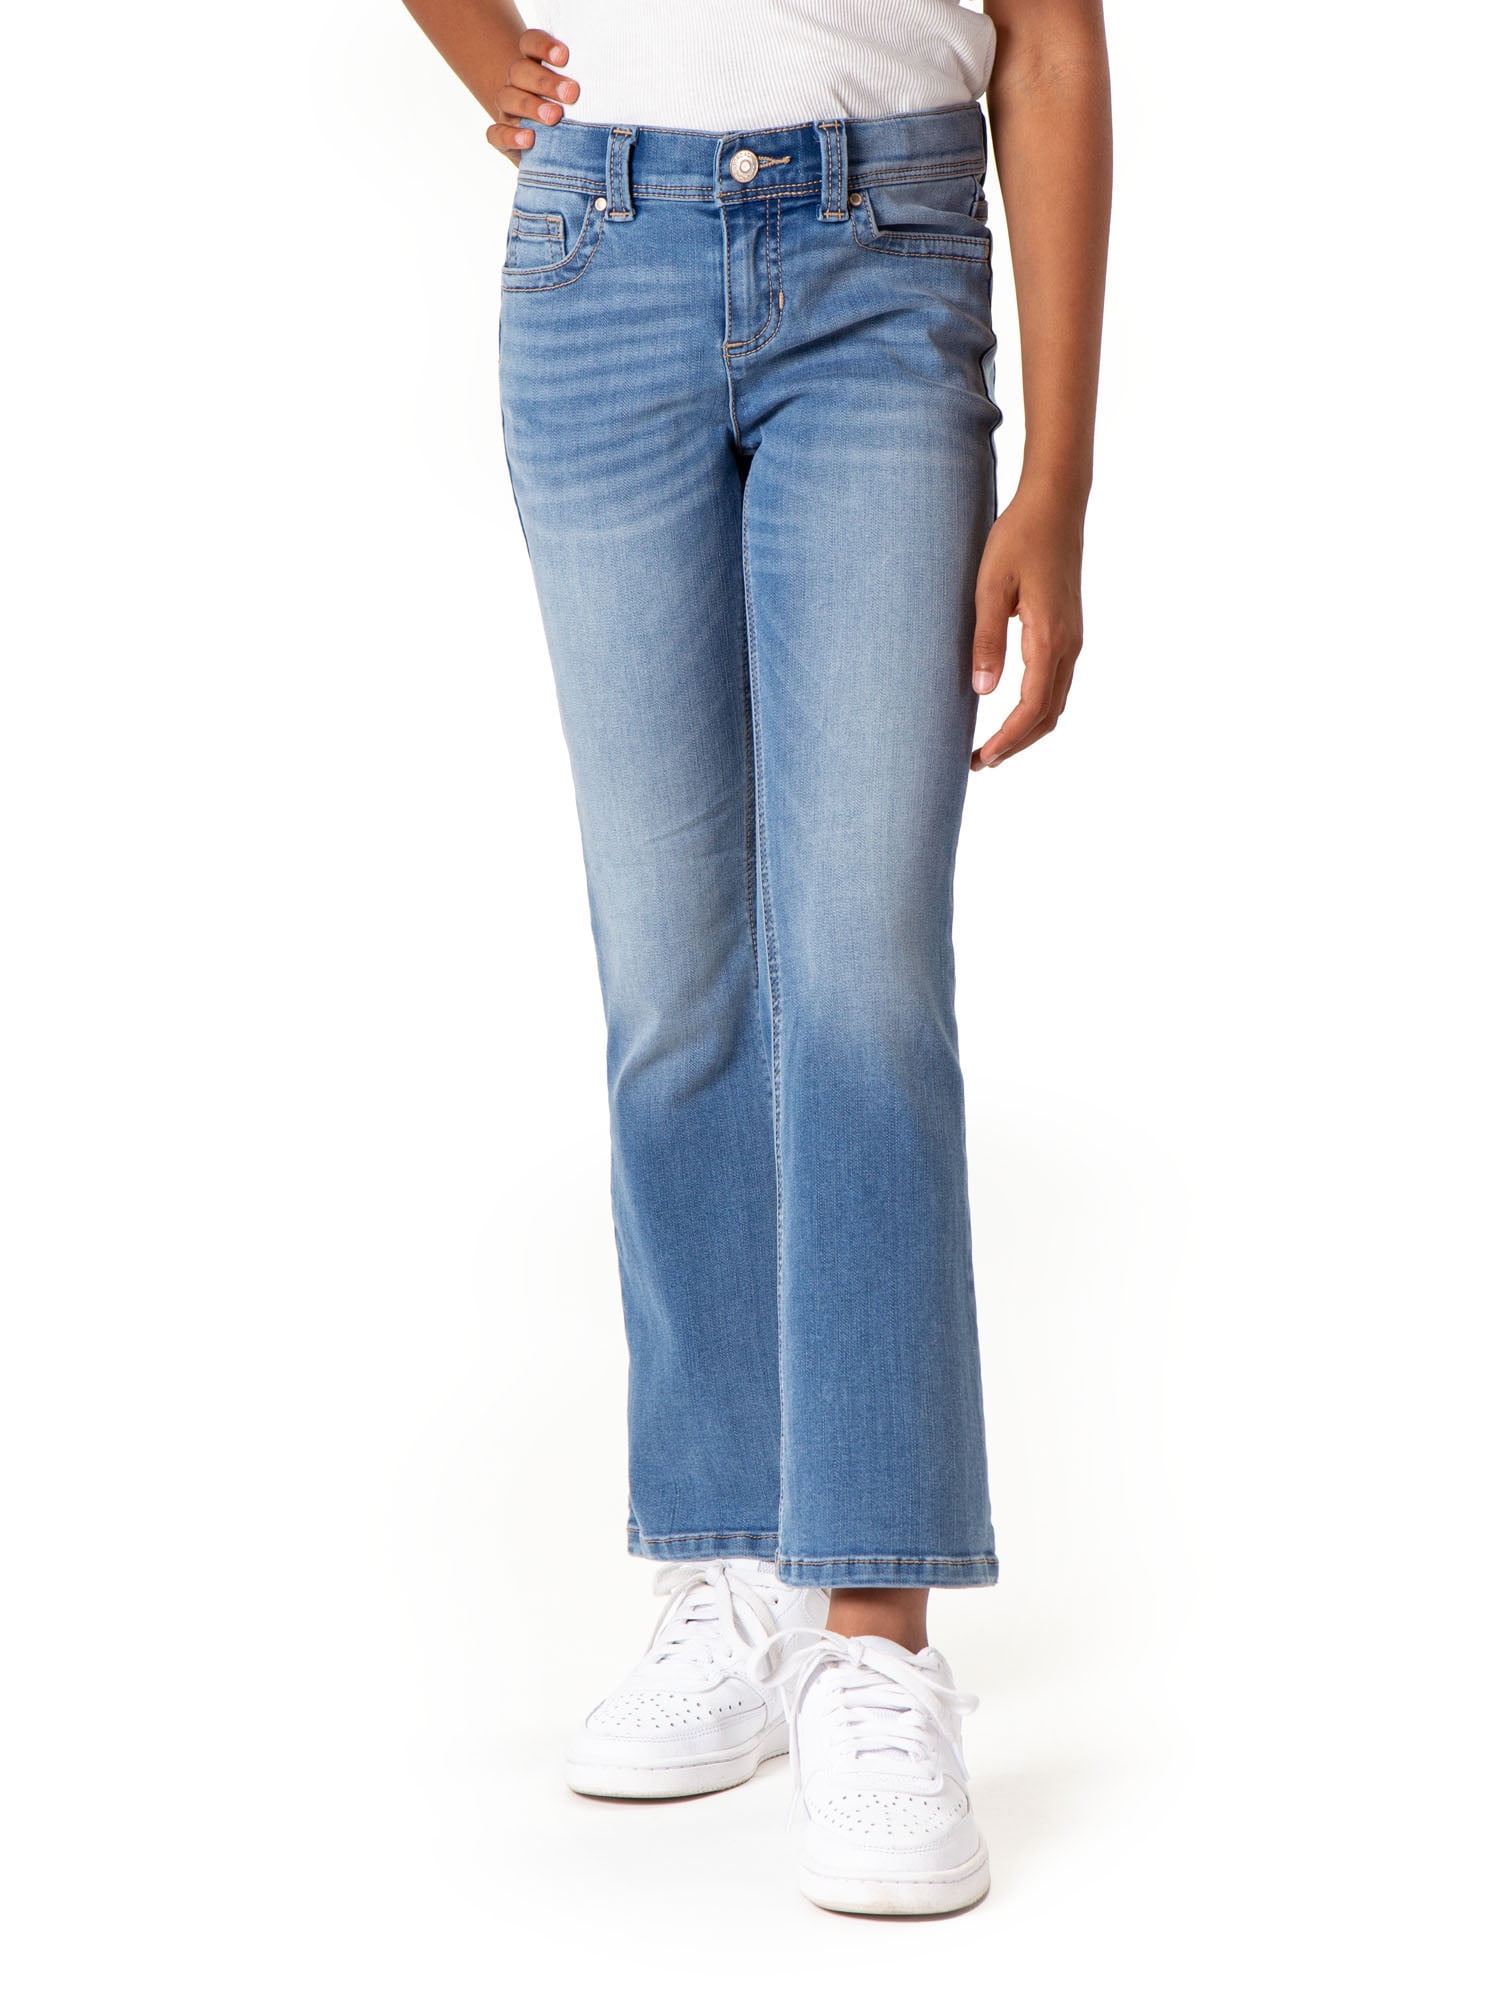 Jordache Girls Bootcut Jeans, Sizes 5-18 & Plus - Walmart.com